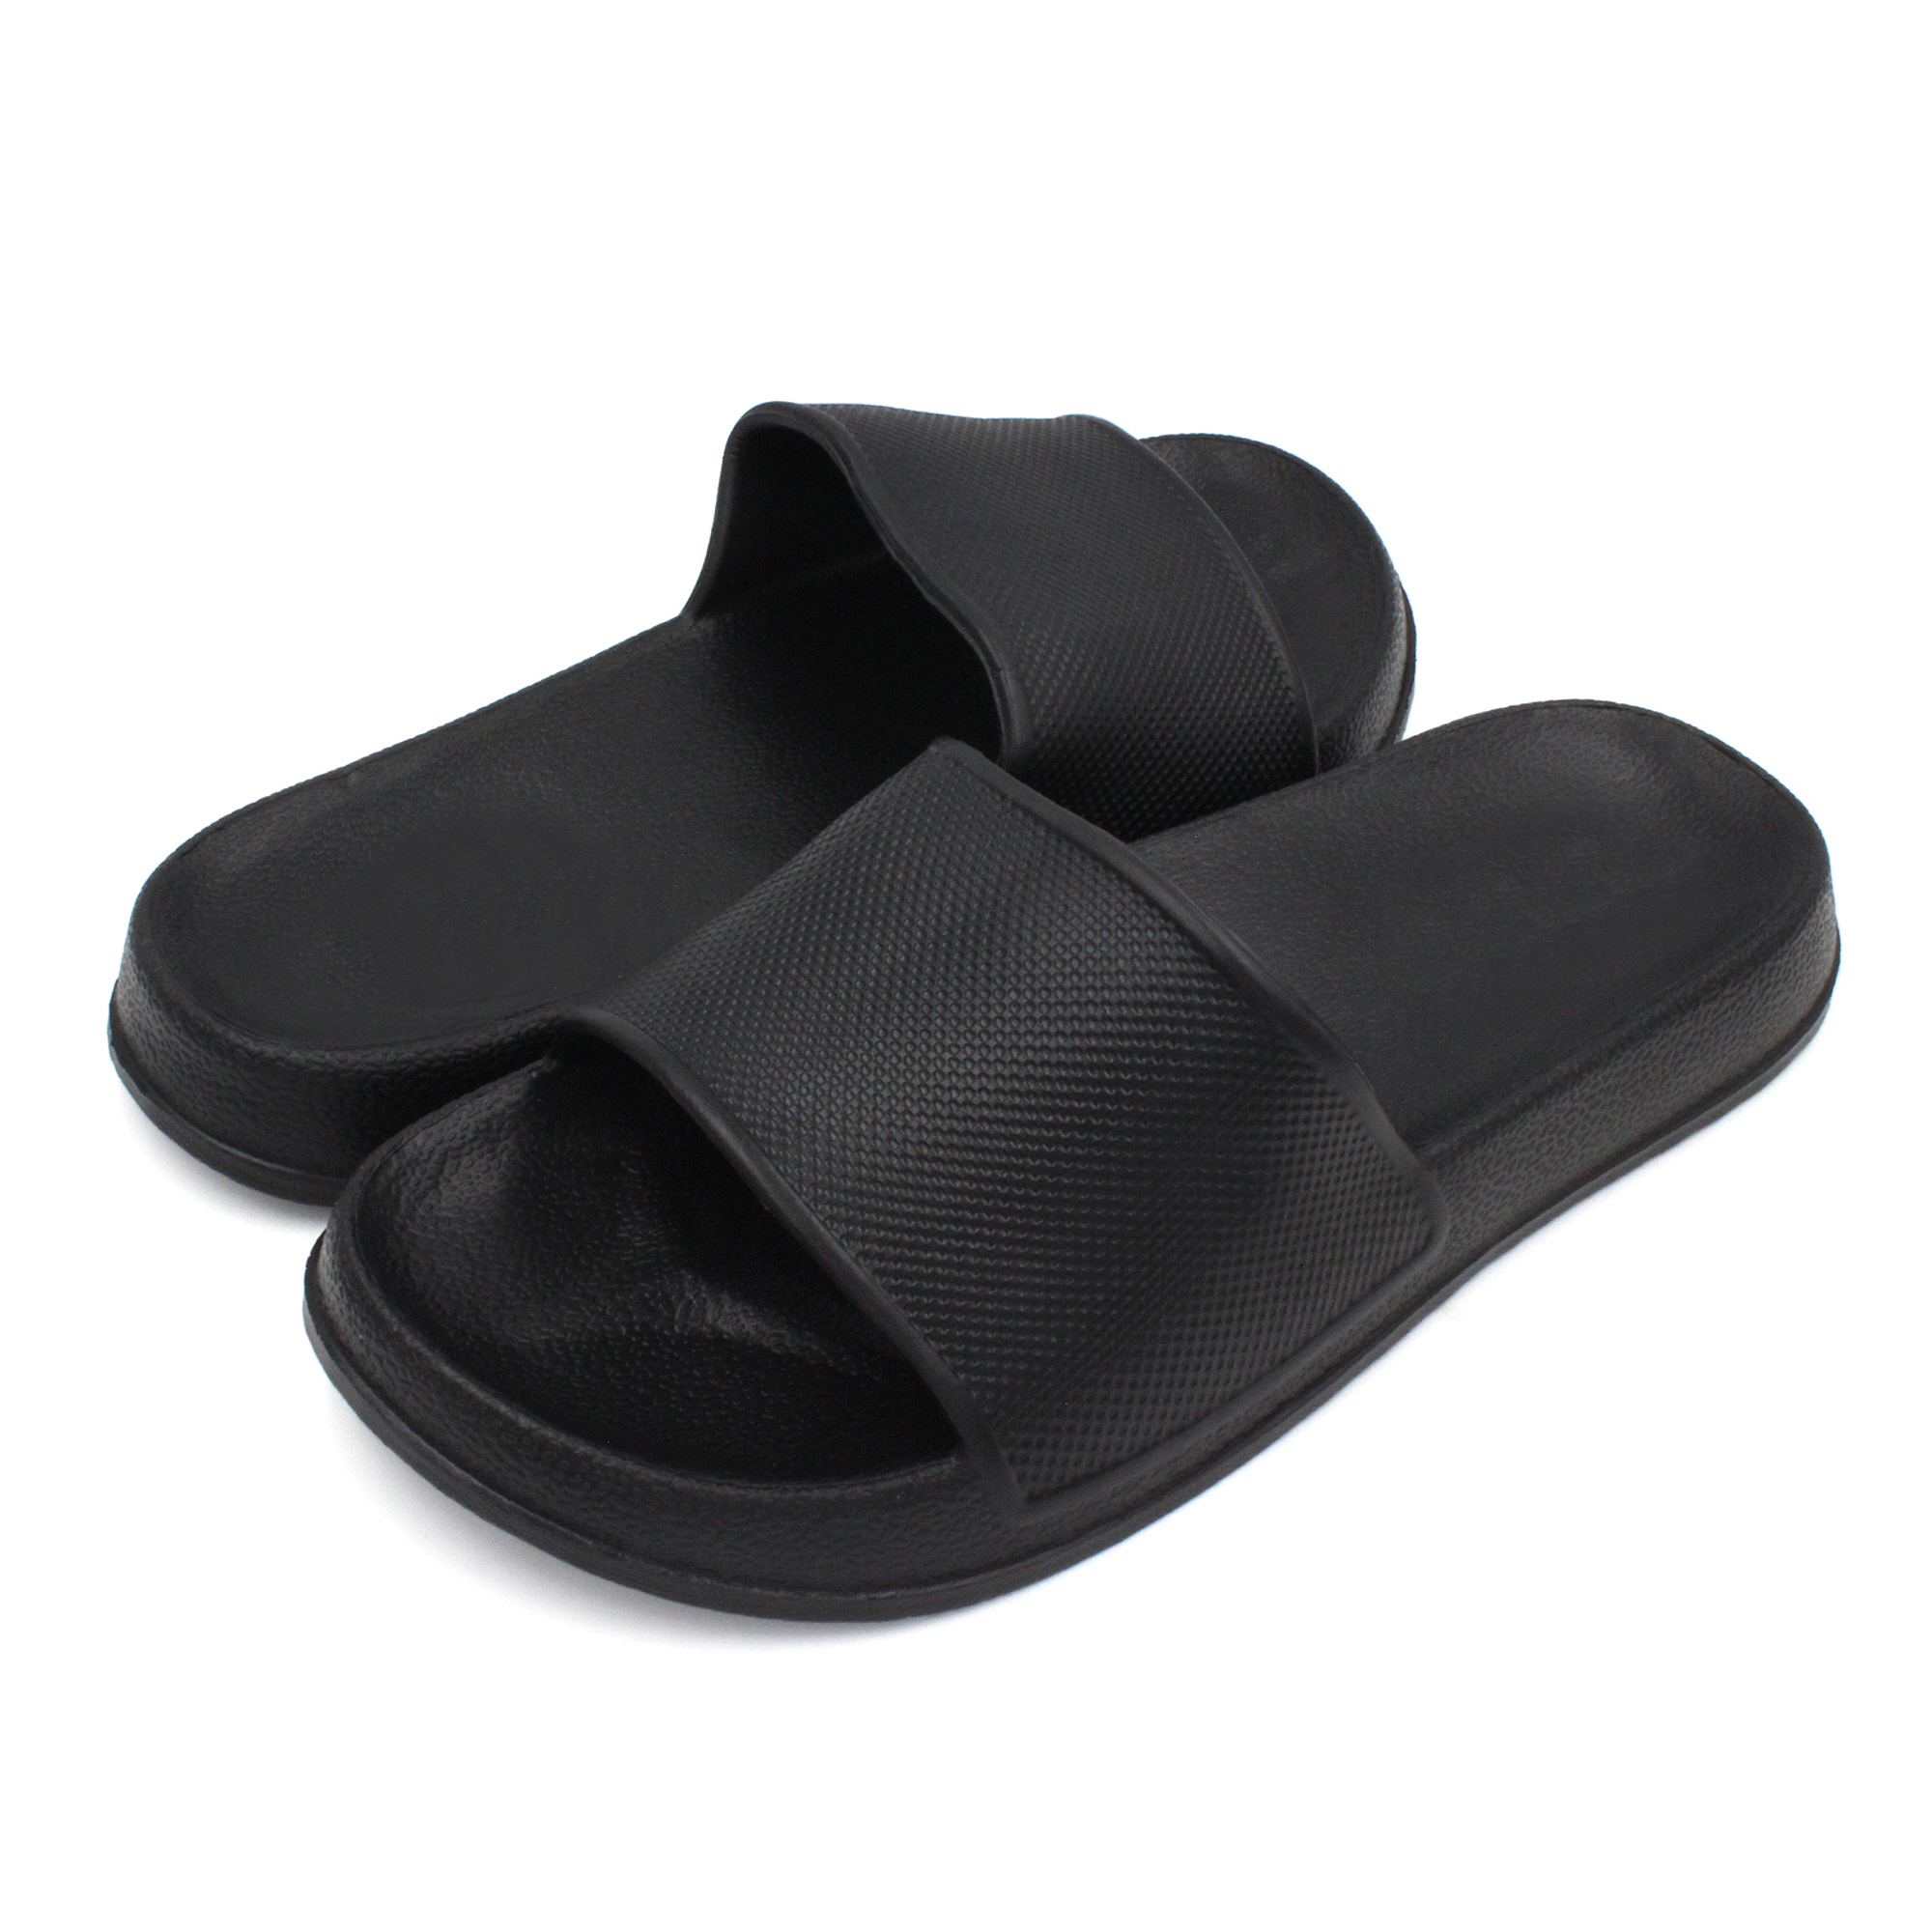 Women's Casual Slides Sports Bath Sandals House Shoes | eBay